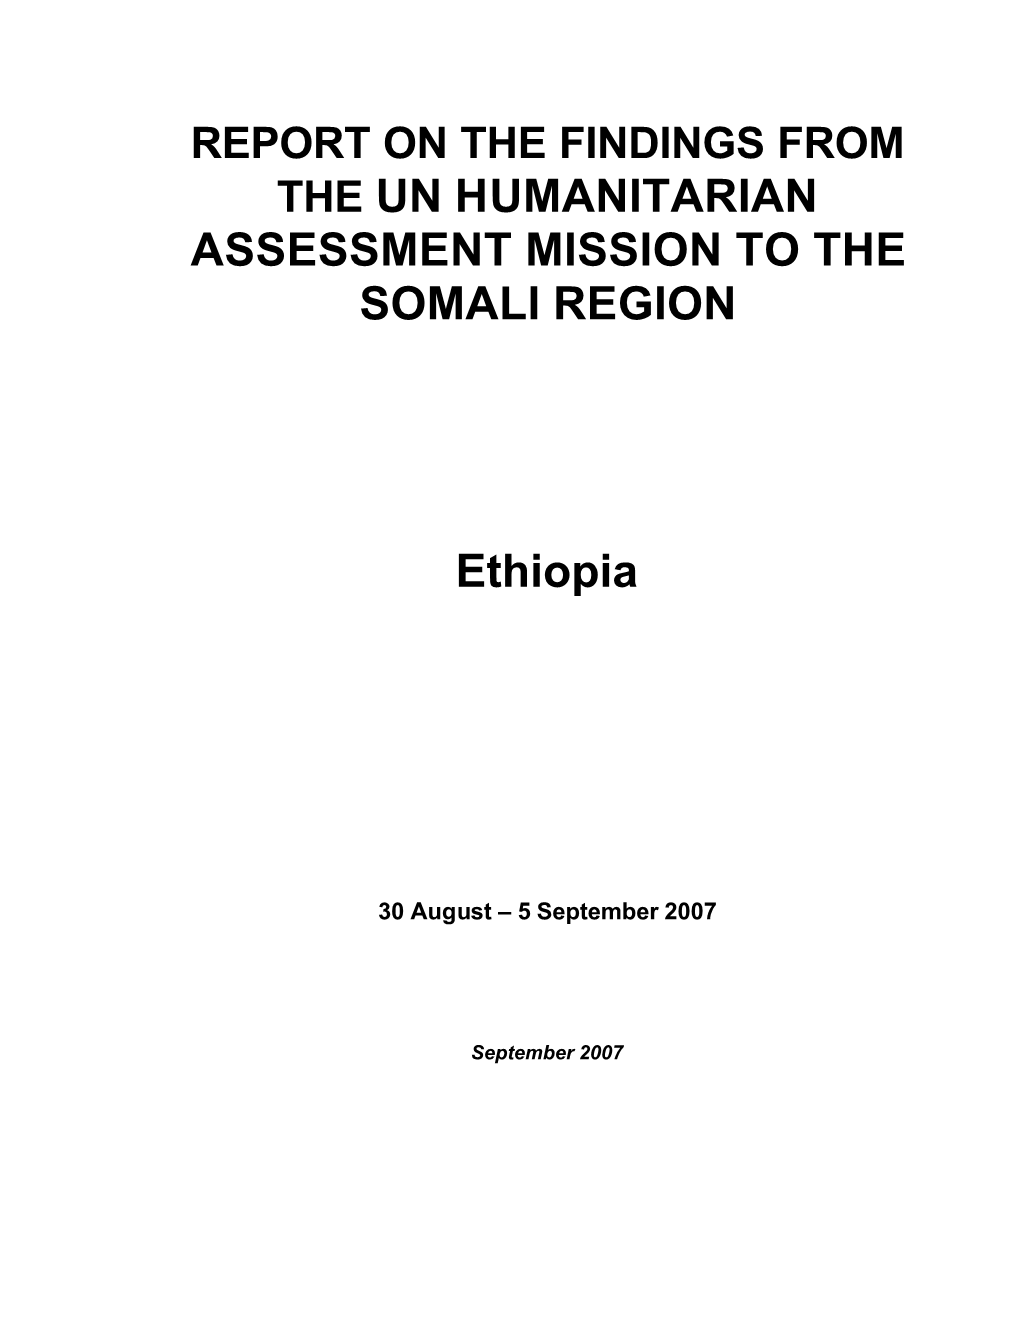 UN Humanitarian Assessment Mission to Somali Region FINAL 19092007